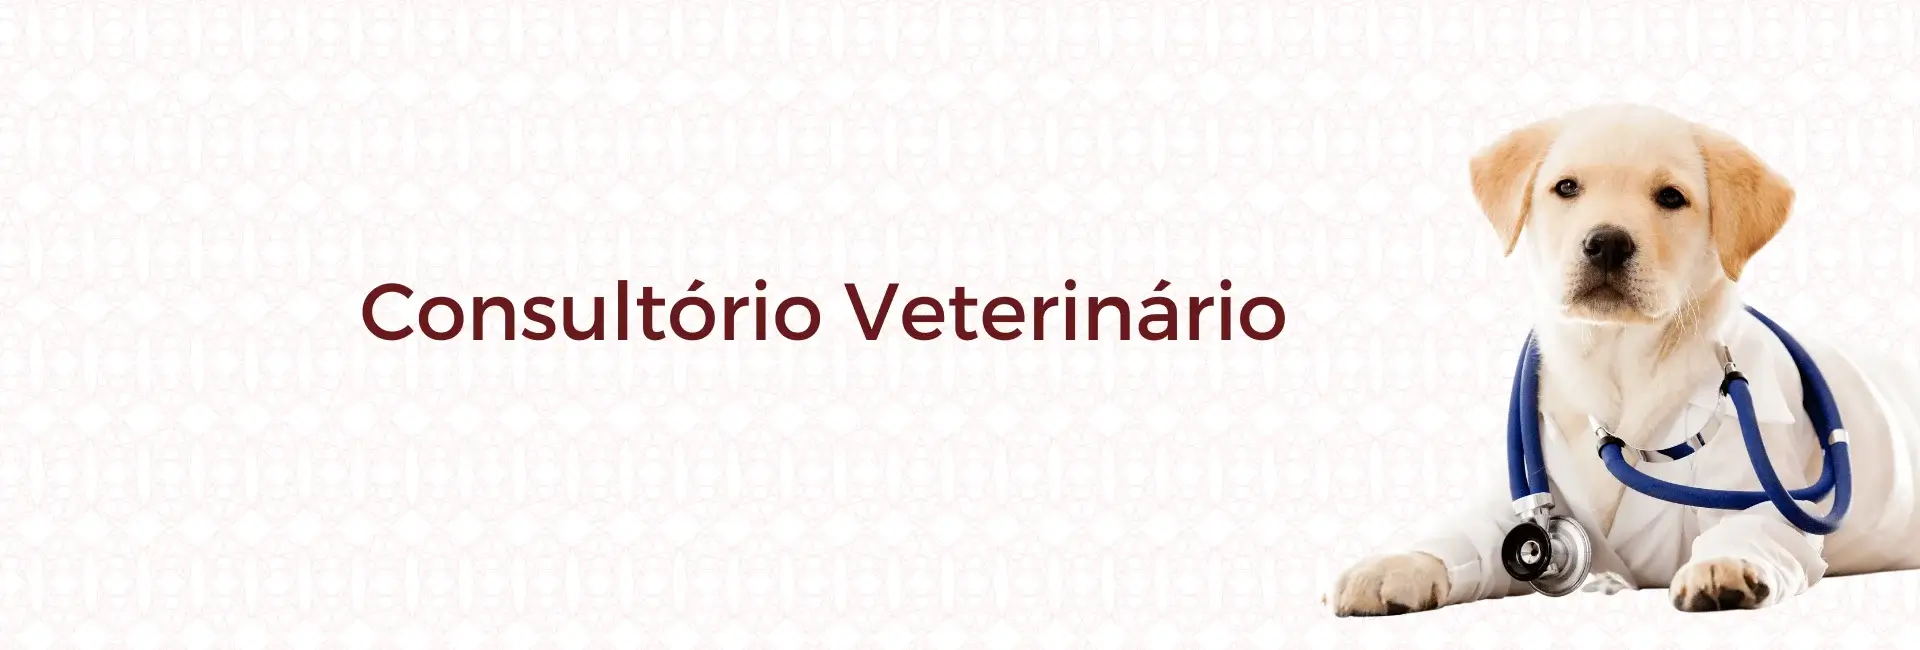 Namu Royal Pet Store Consultório Veterinário